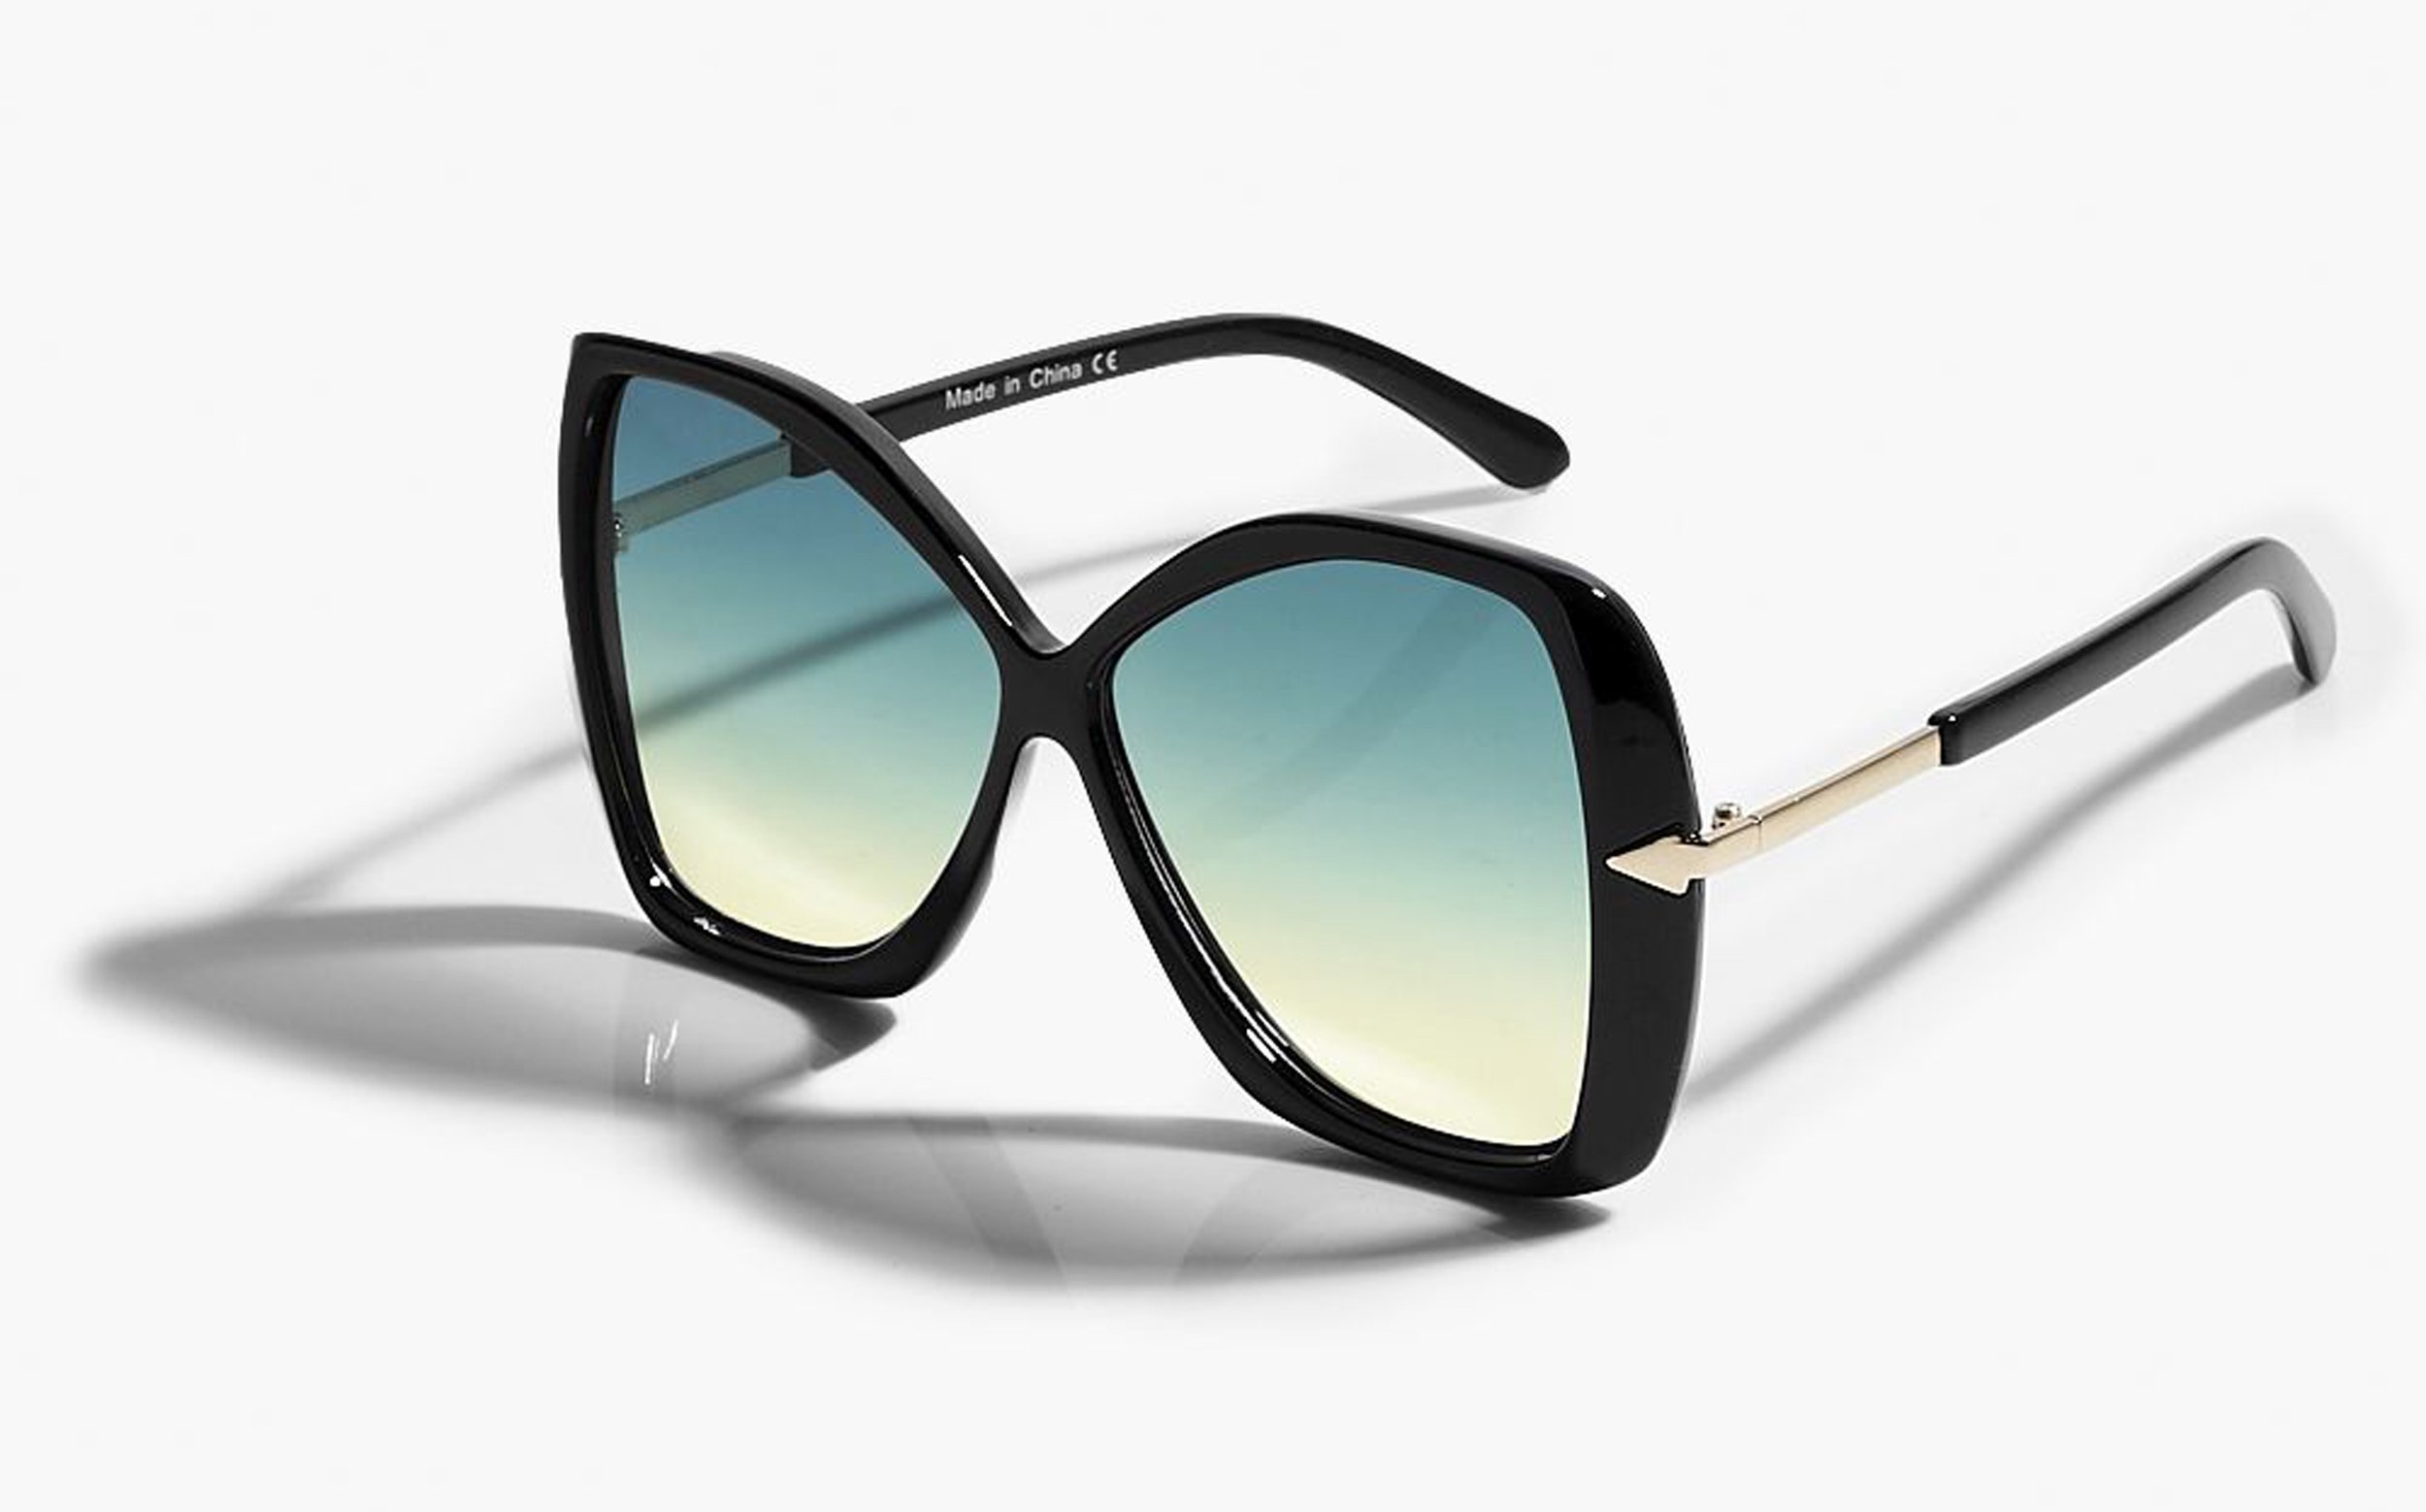 Accessorize ‘Sophie’ Metal Detail Square Sunglasses in Black €17.90, 